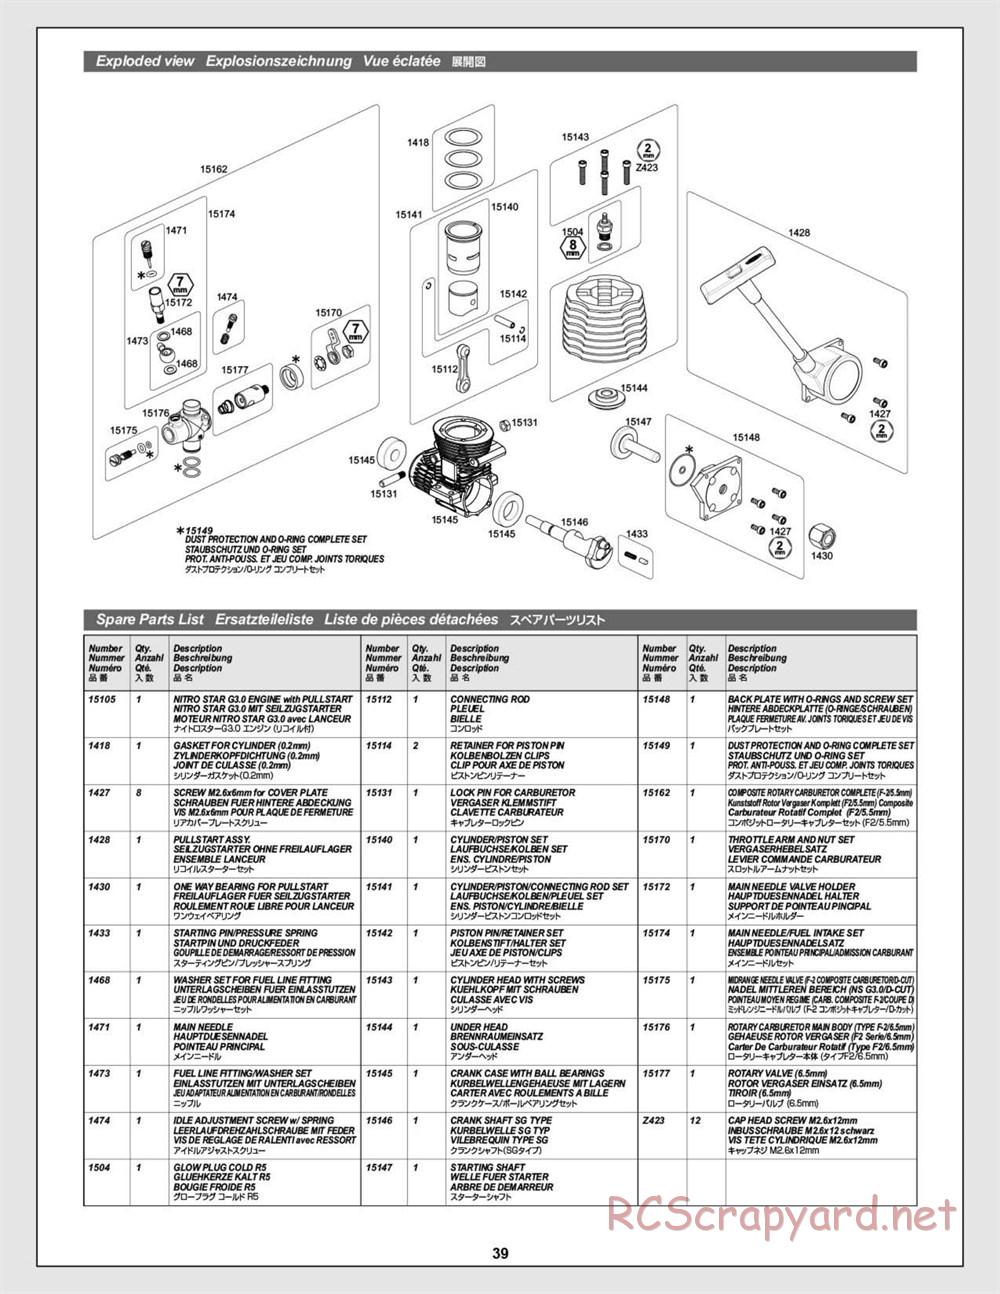 HPI - Firestorm 10T - Manual - Page 39